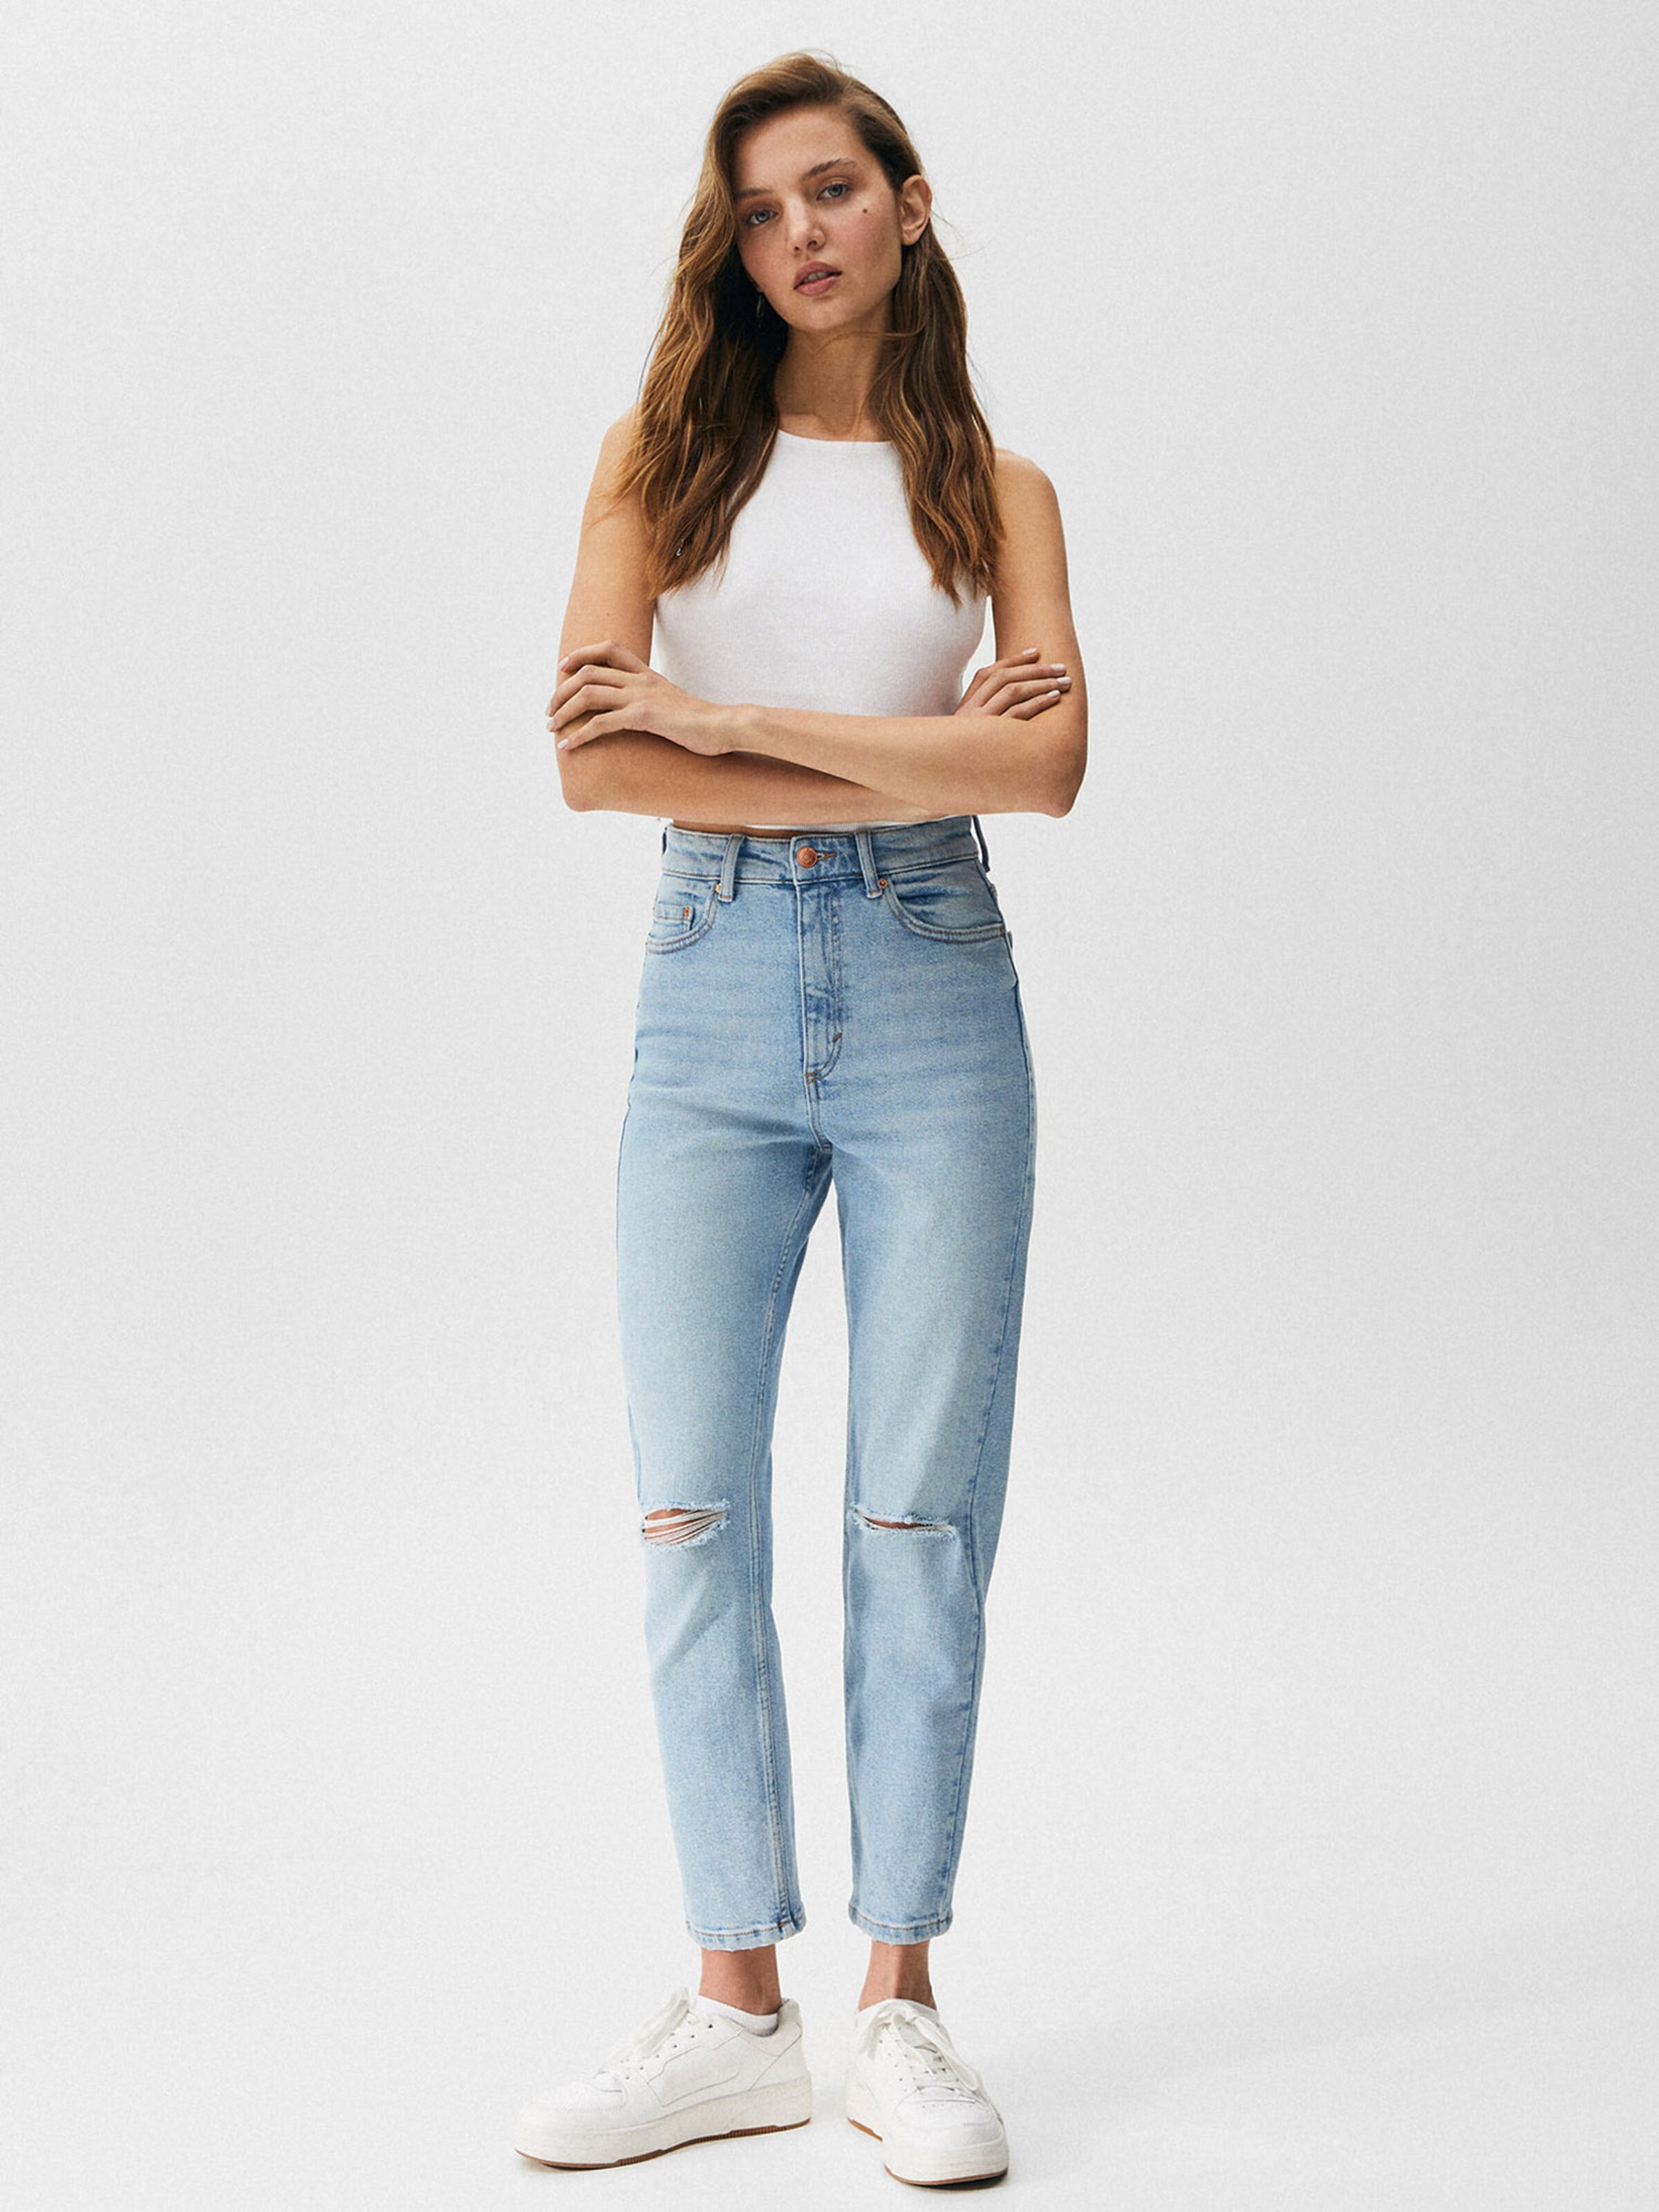 Jeans Kendell ABOUT YOU Donna Abbigliamento Pantaloni e jeans Jeans Jeans skinny 